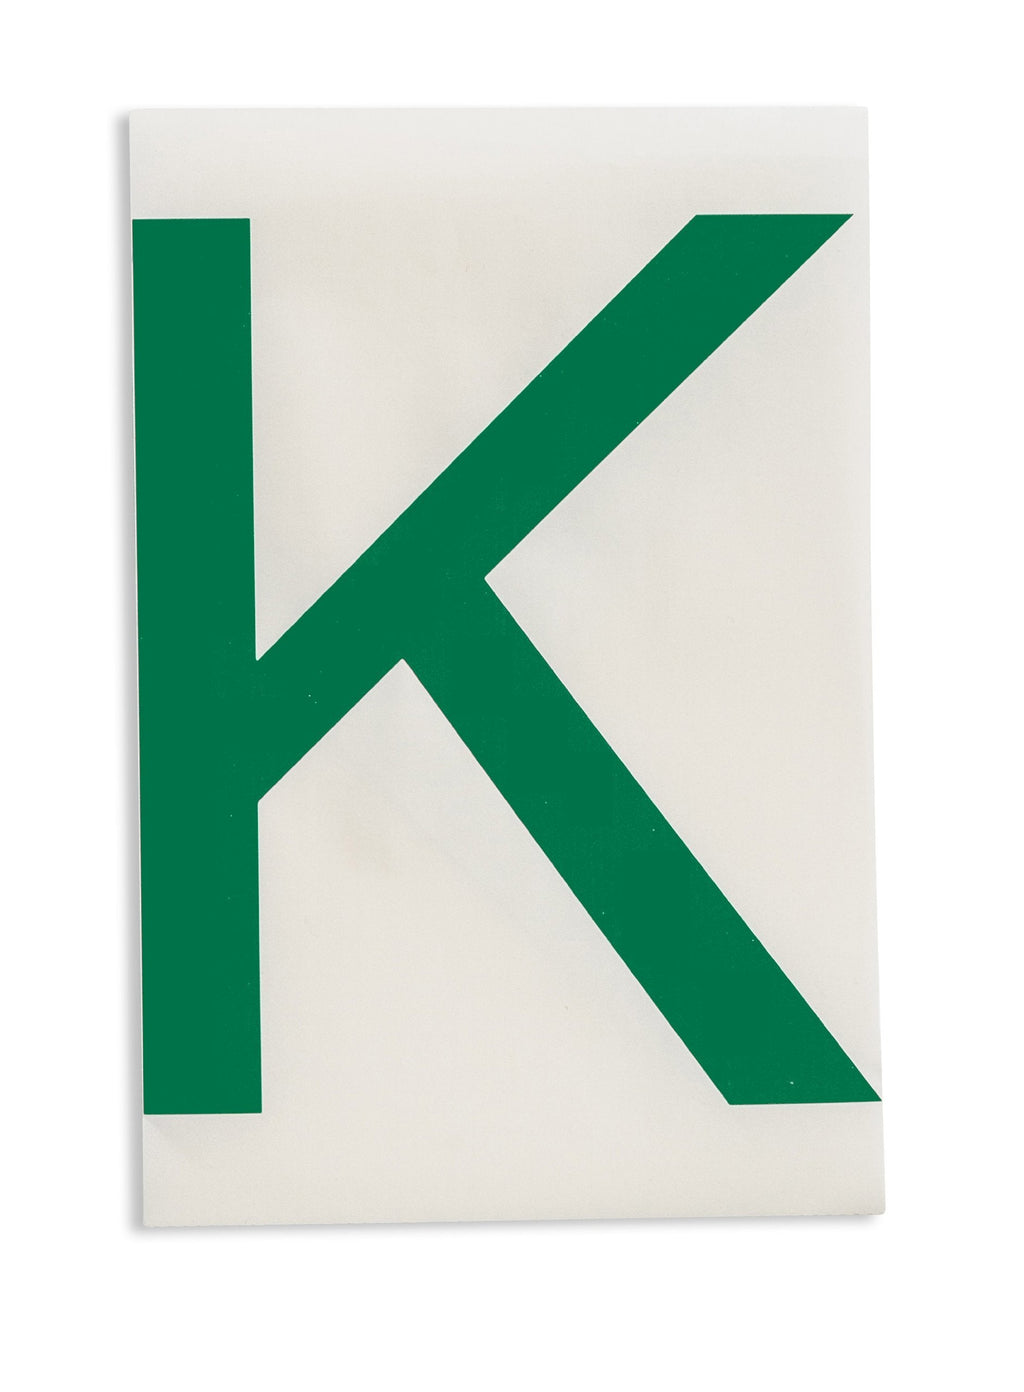  [AUSTRALIA] - Brady 121754 ToughStripe Die-Cut Polyester Tape, Green Letter"K"(Pack of 20)